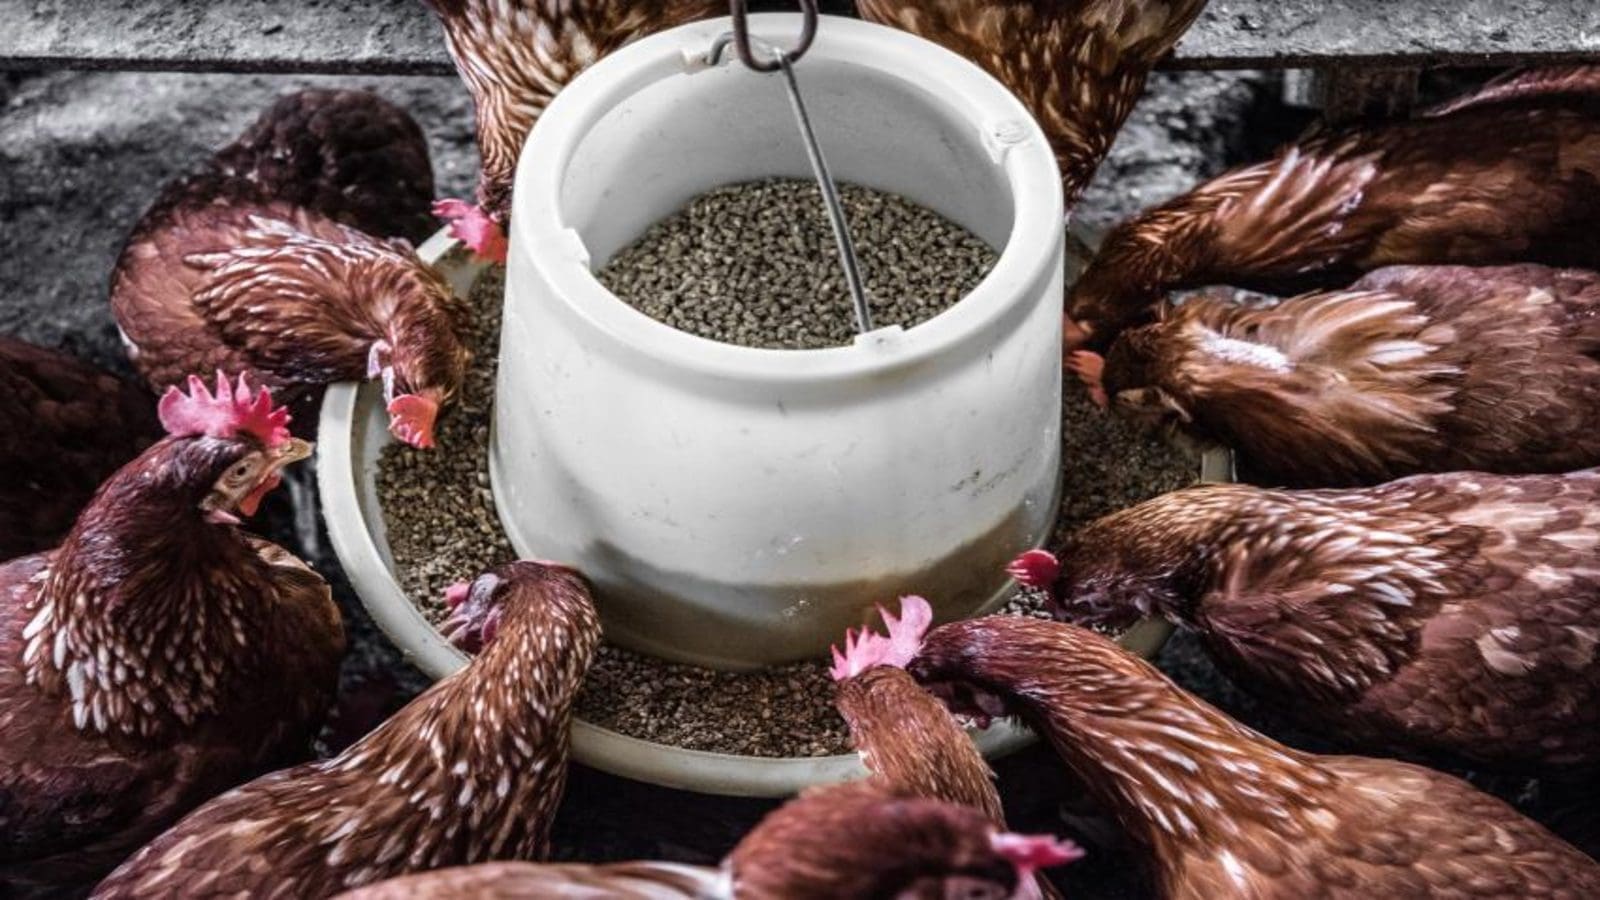 DSM acquires next-gen eubiotics platform start-up to bolster support for sustainable animal farming